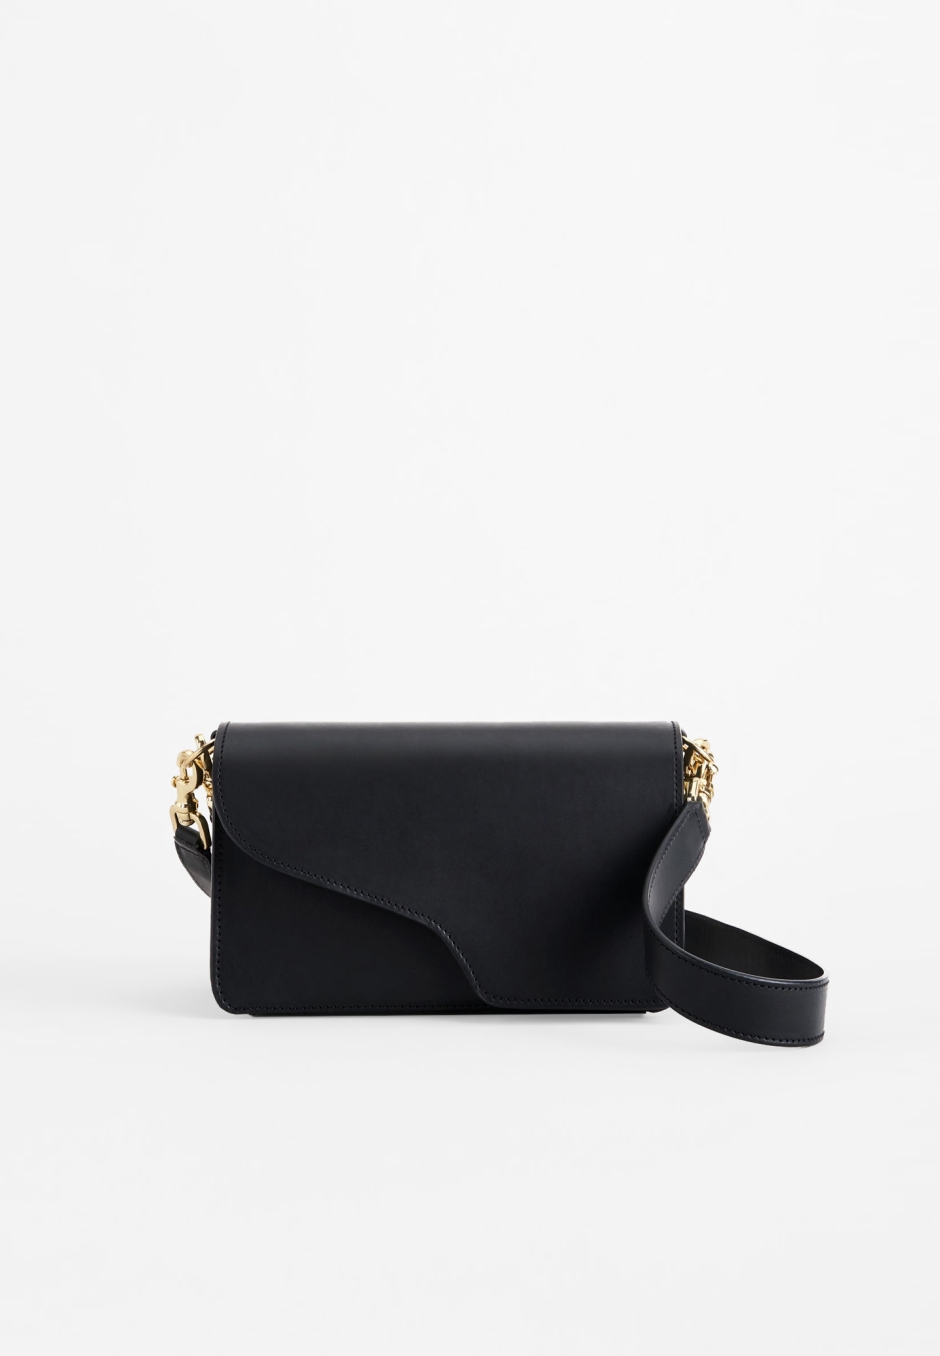 ATP Atelier Assisi Black Leather Baguette Bag